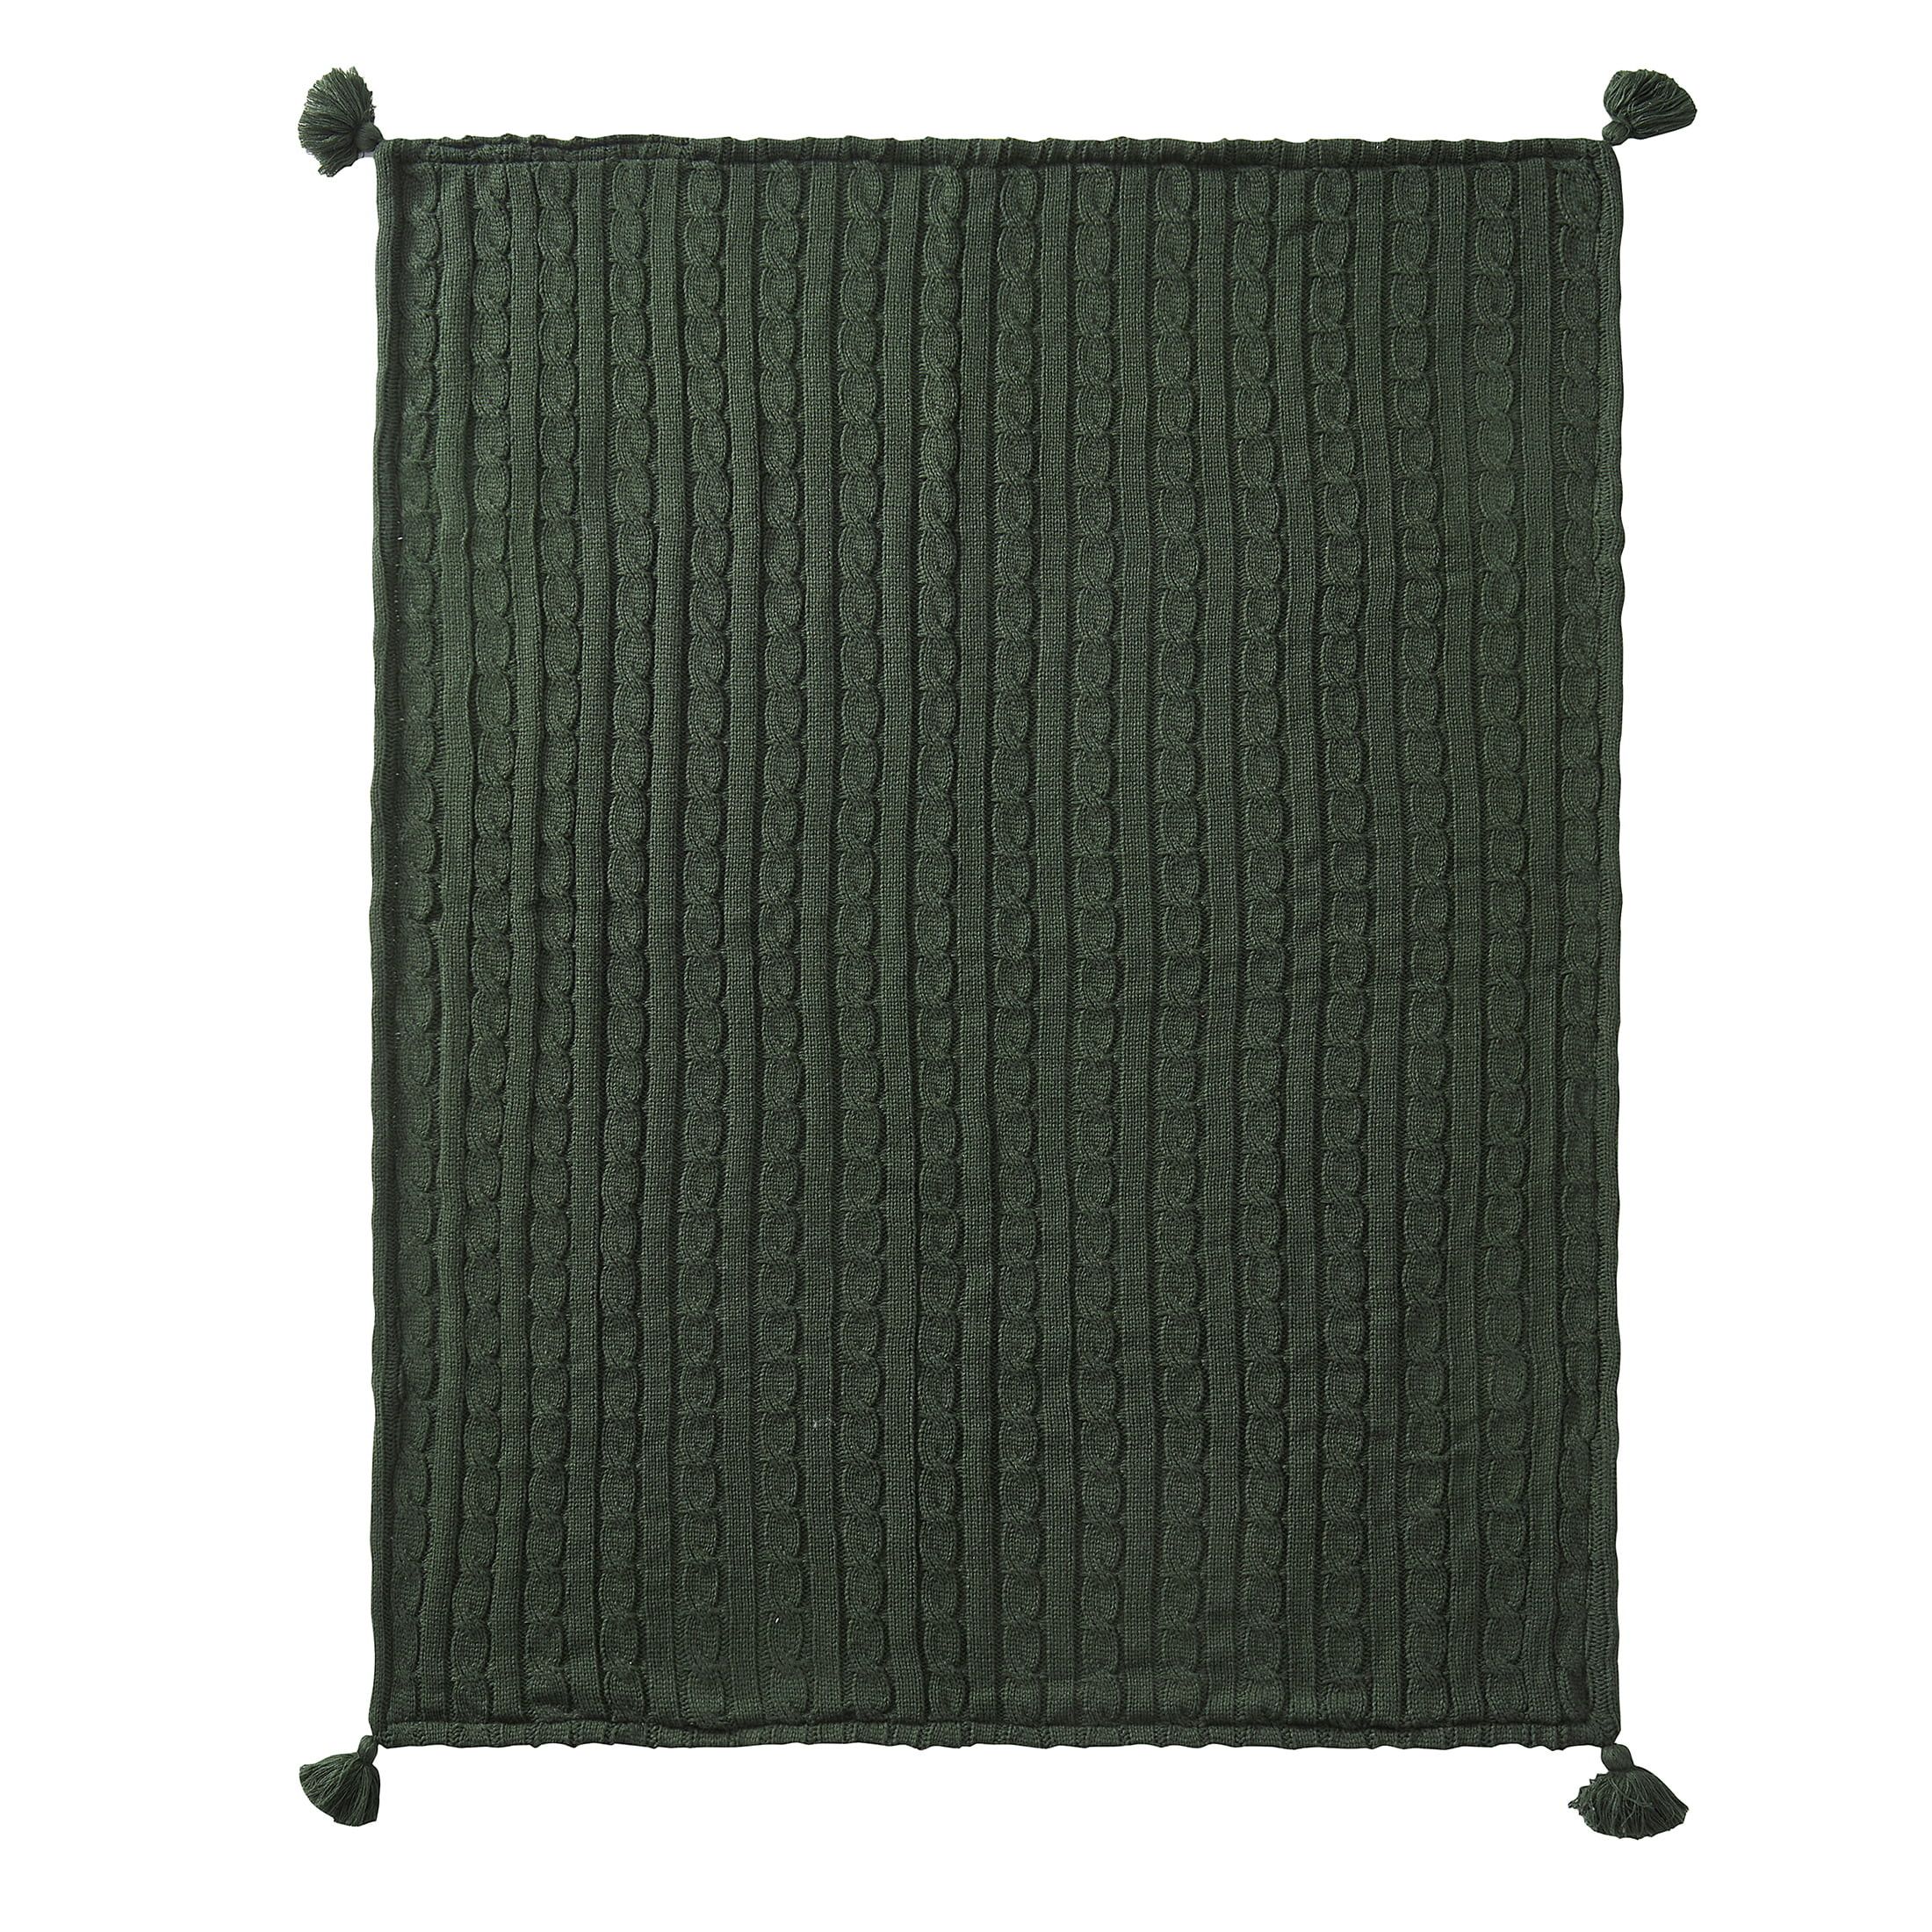 My Texas House Reece Sherpa Cable Knit Throw, 50" x 60", Kombu Green | Walmart (US)